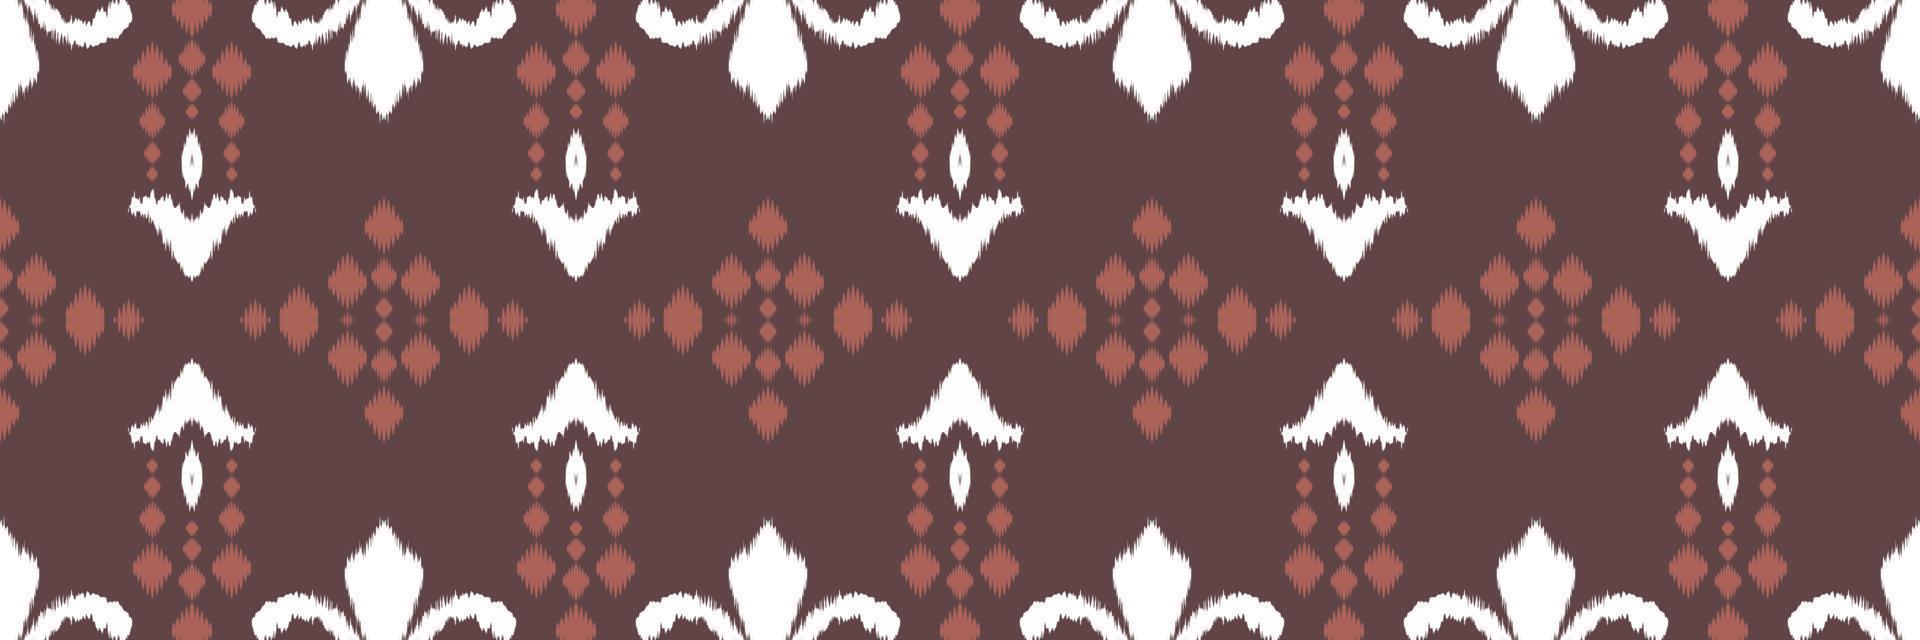 ikkat o ikat aztec batik textil diseño vectorial digital de patrones sin fisuras para imprimir saree kurti borneo borde de tela símbolos de pincel muestras de algodón vector